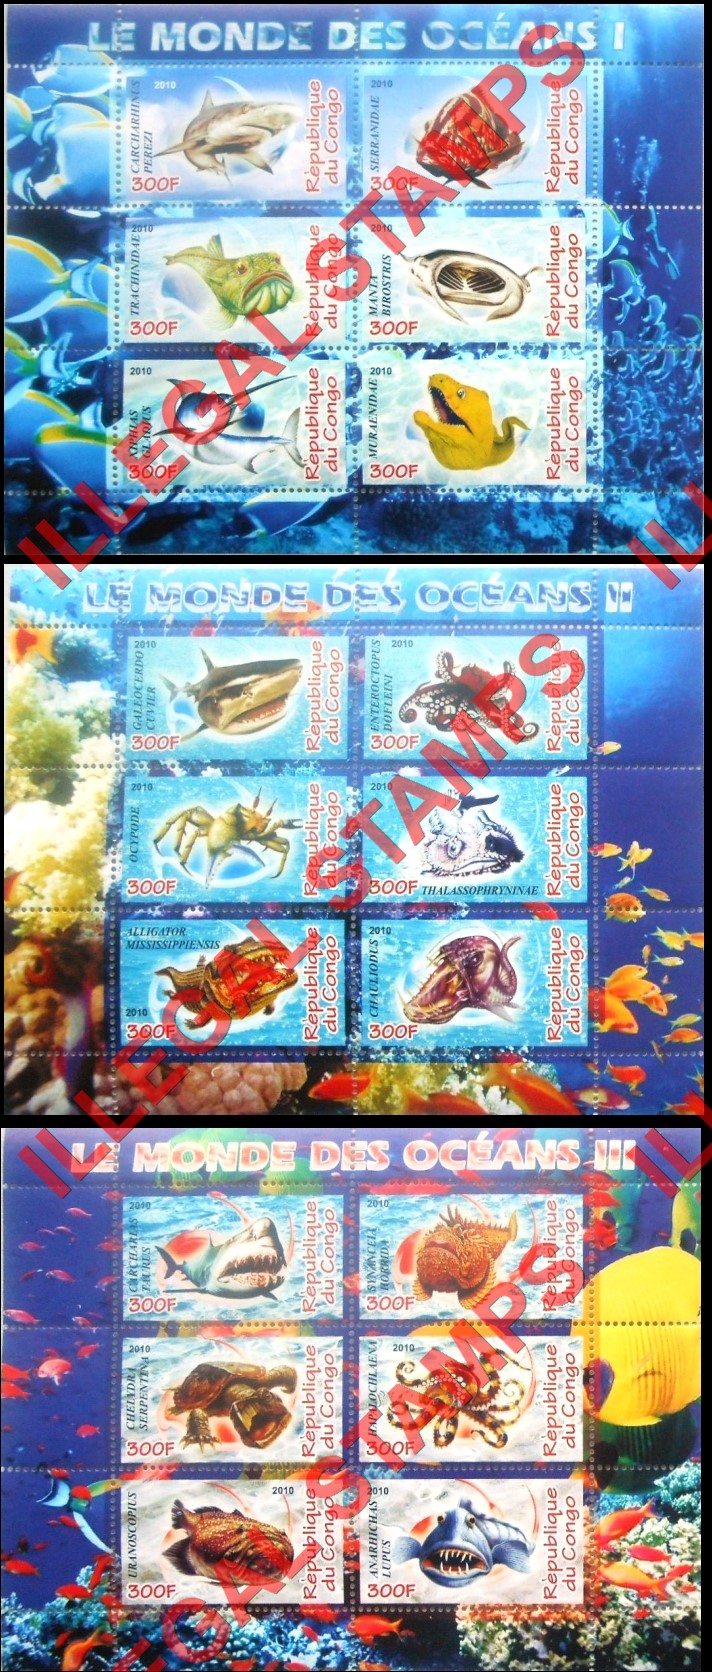 Congo Republic 2010 Ocean Life Illegal Stamp Souvenir Sheets of 6 (Part 1)